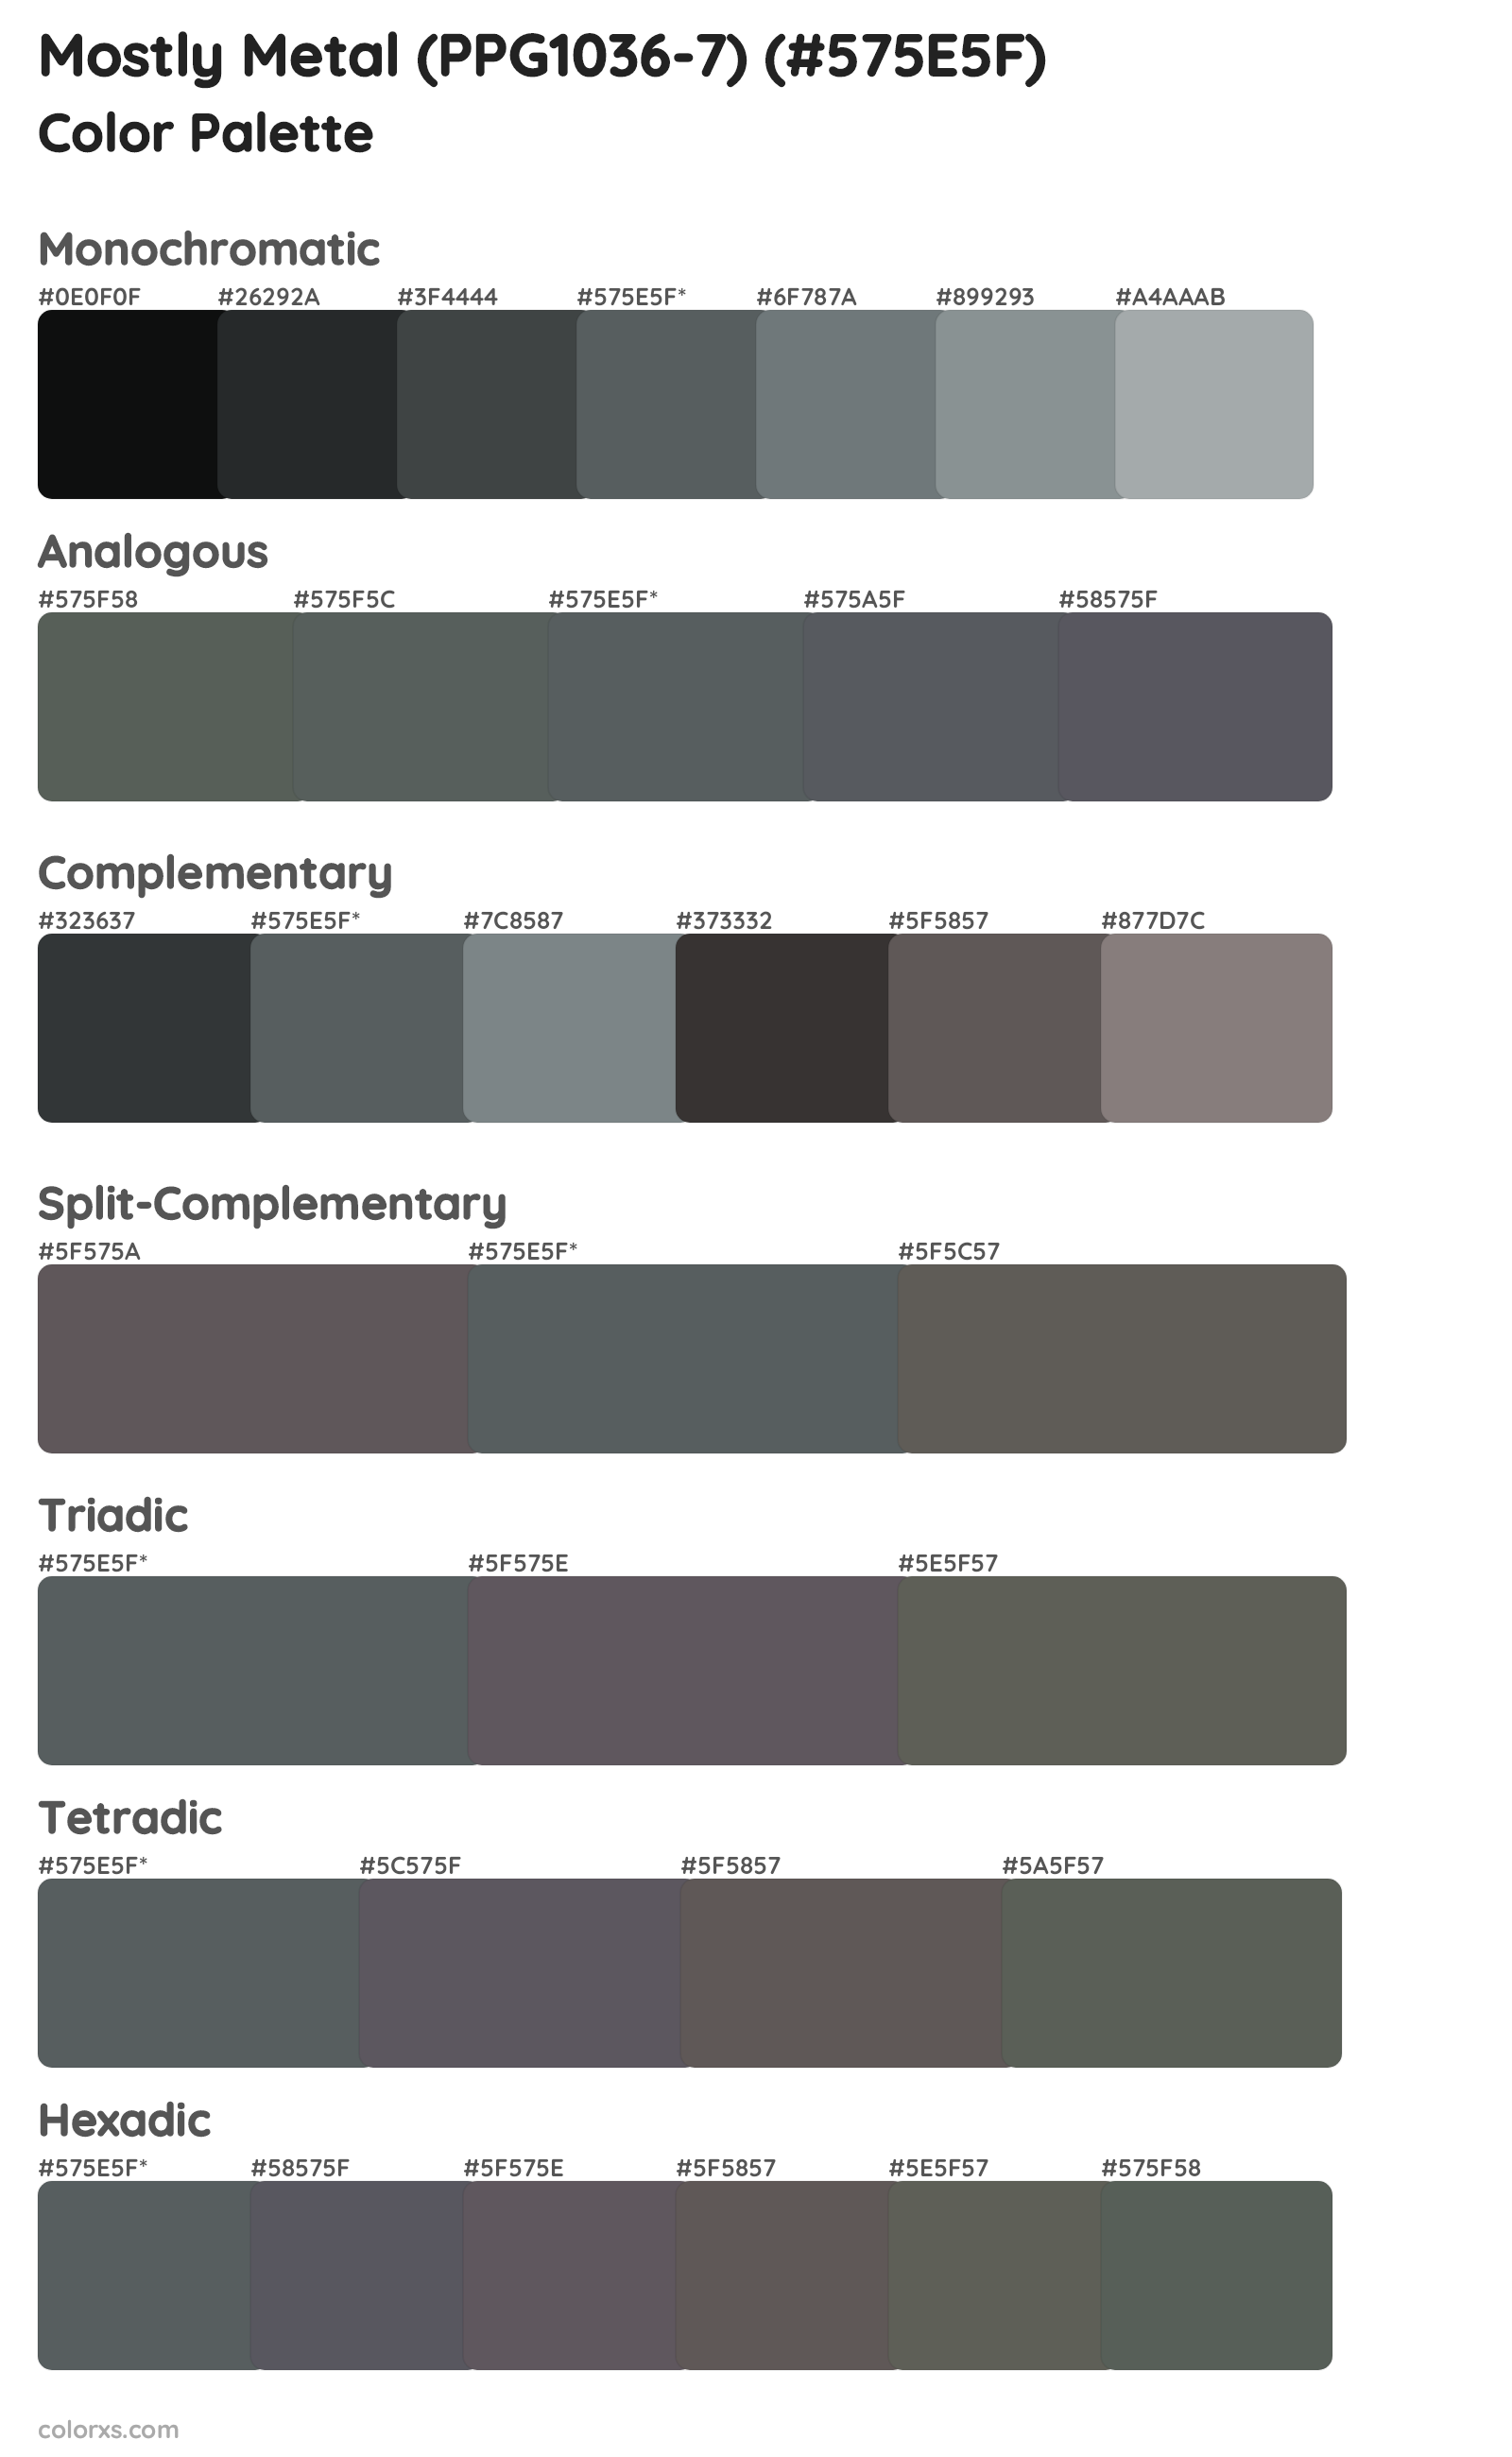 Mostly Metal (PPG1036-7) Color Scheme Palettes